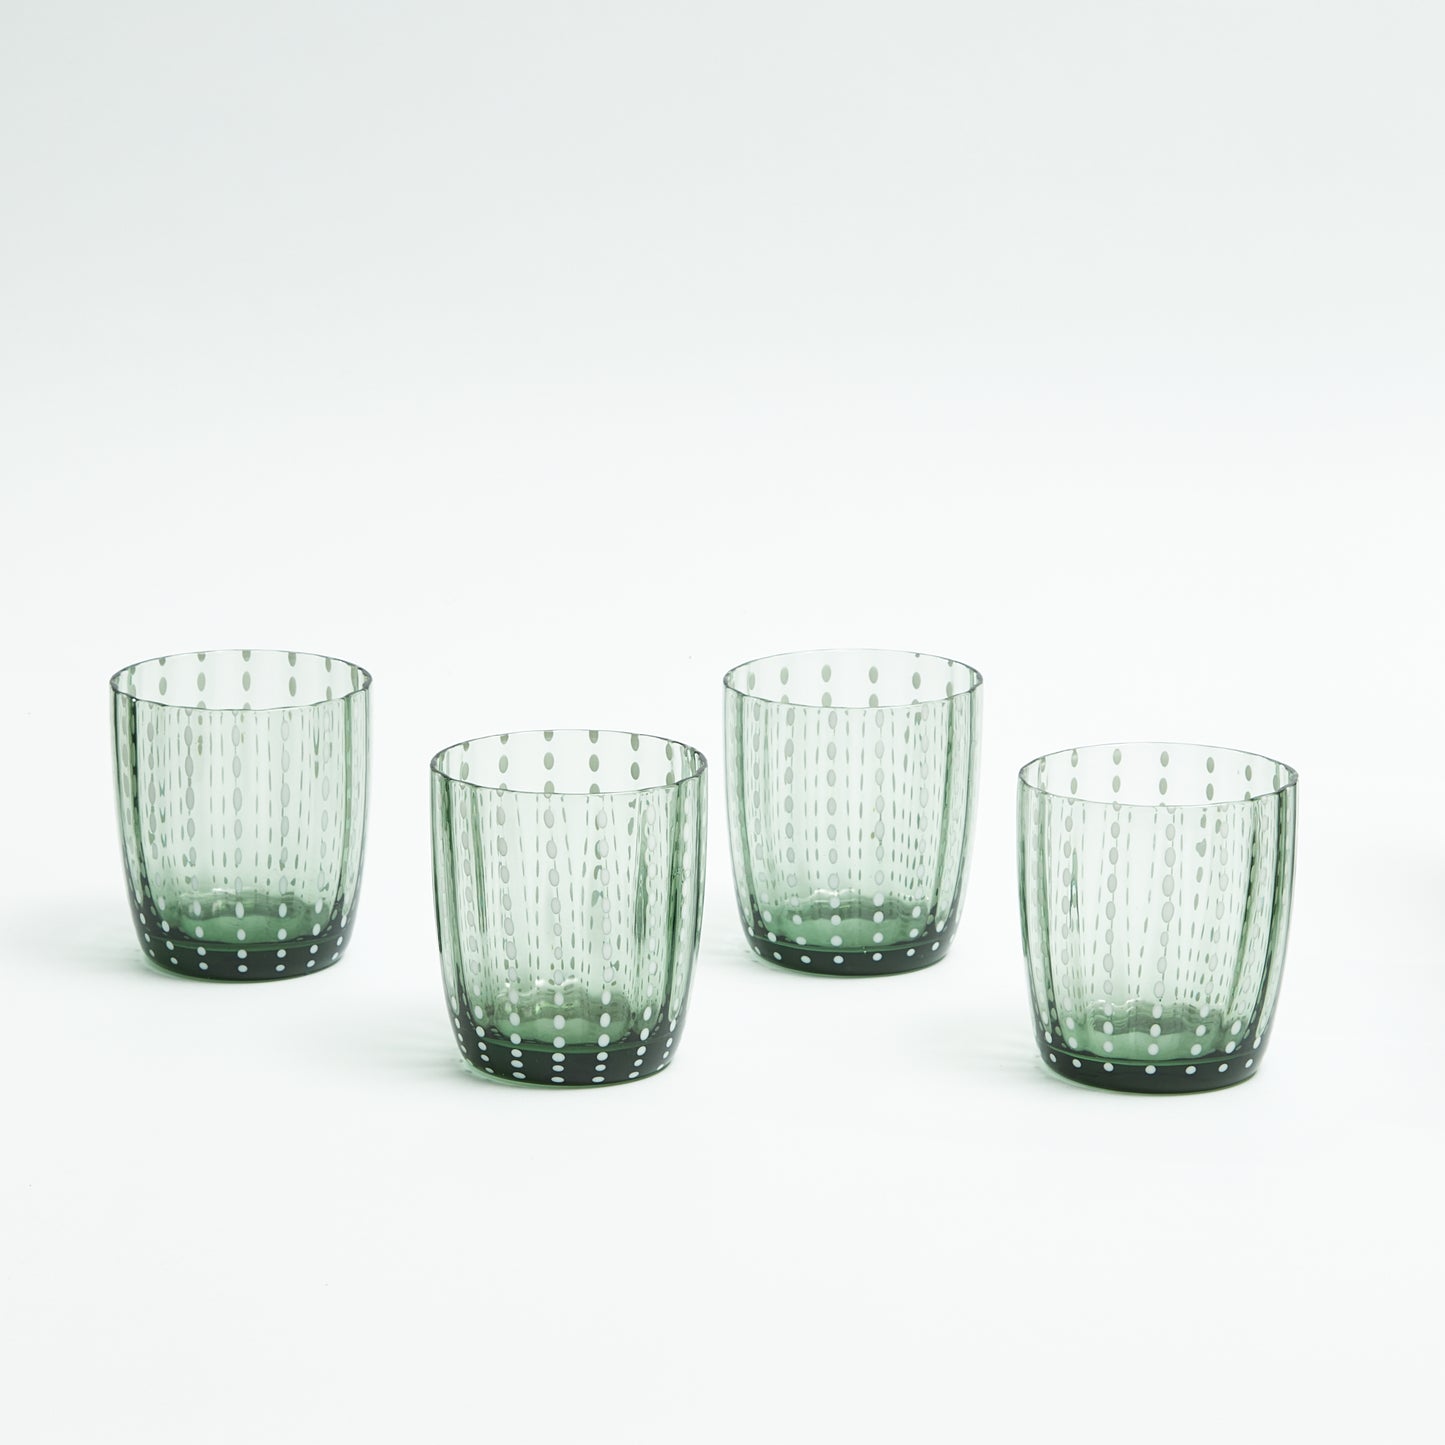 Olive Green Speckled Water Glasses (Set of 4)